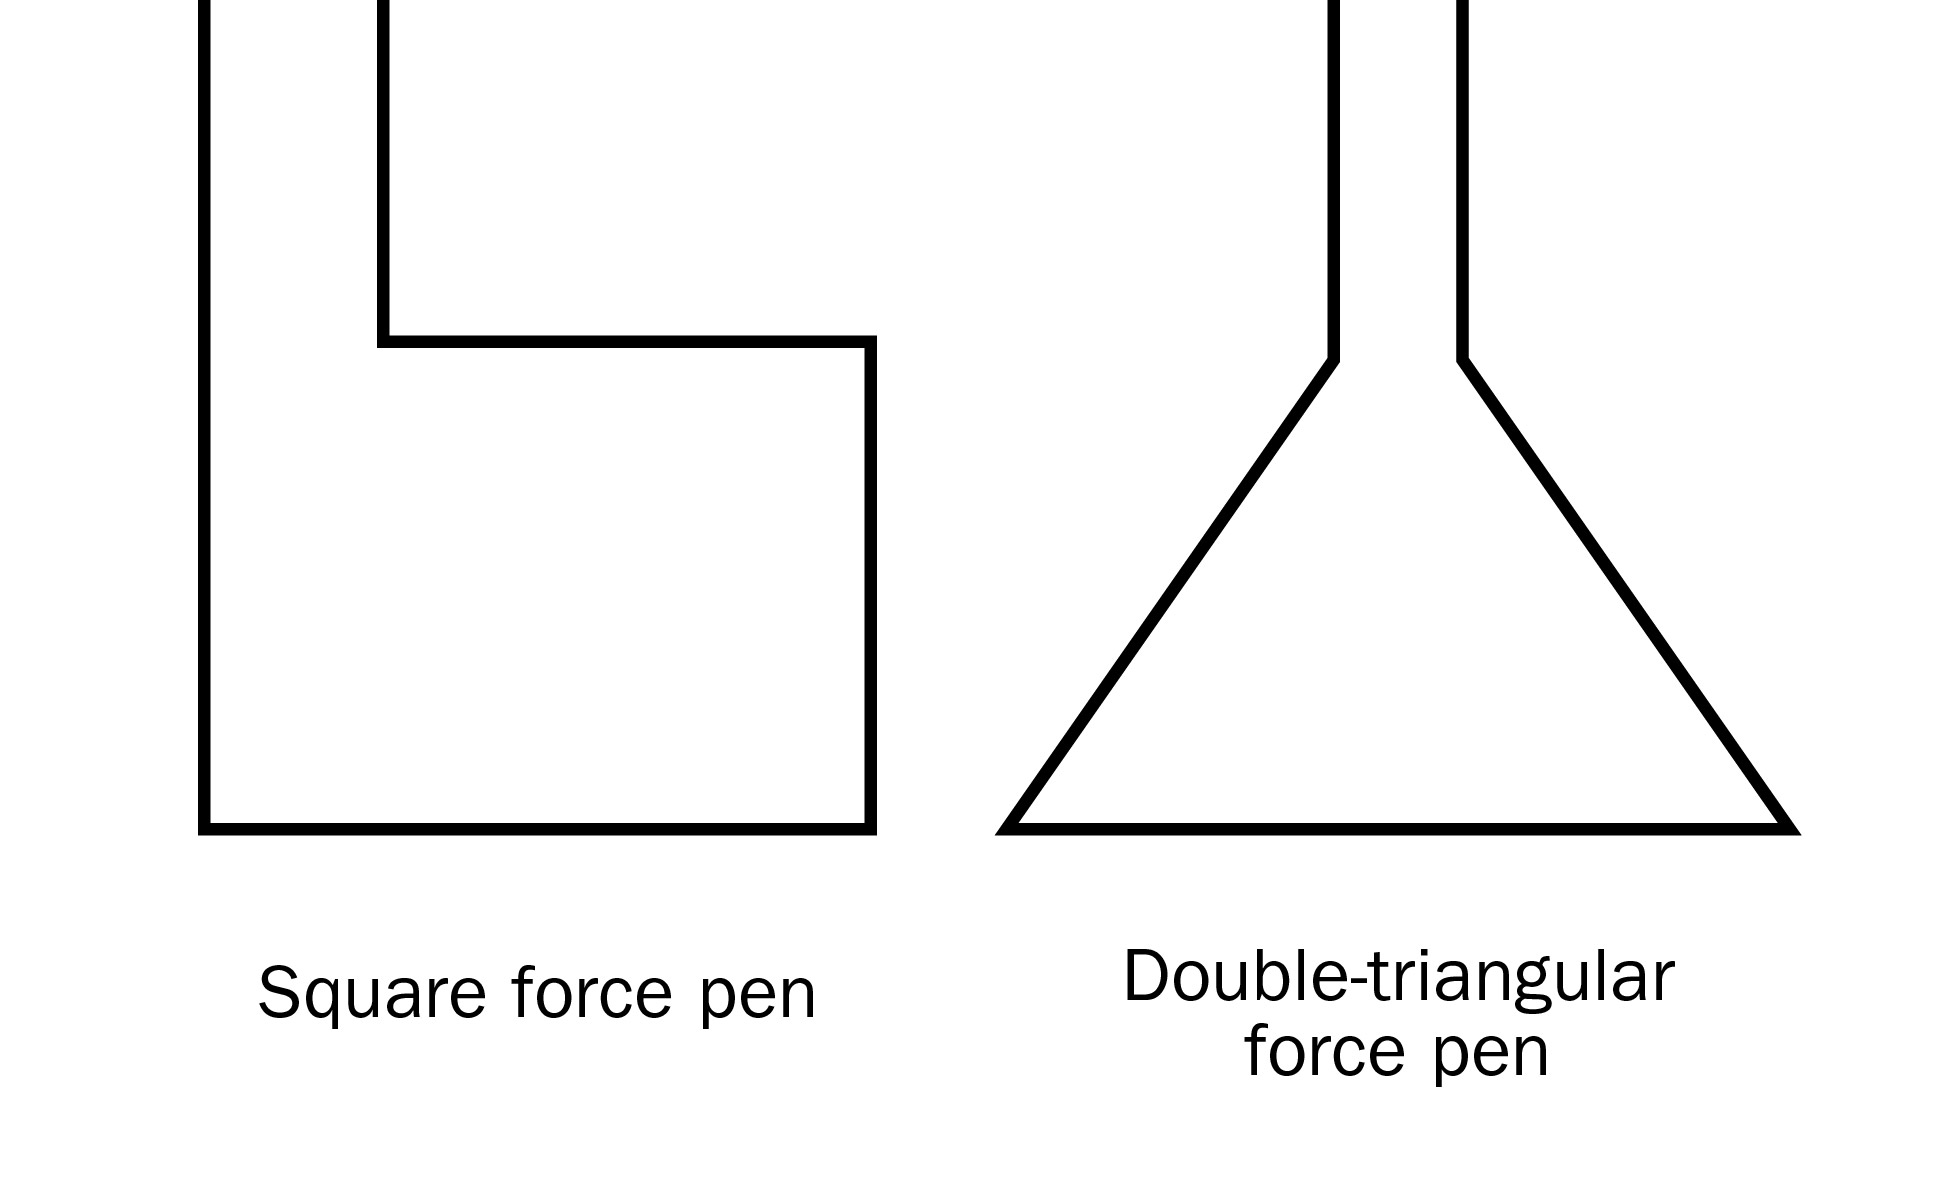 Diagram of unsuccessful force pen shapes.